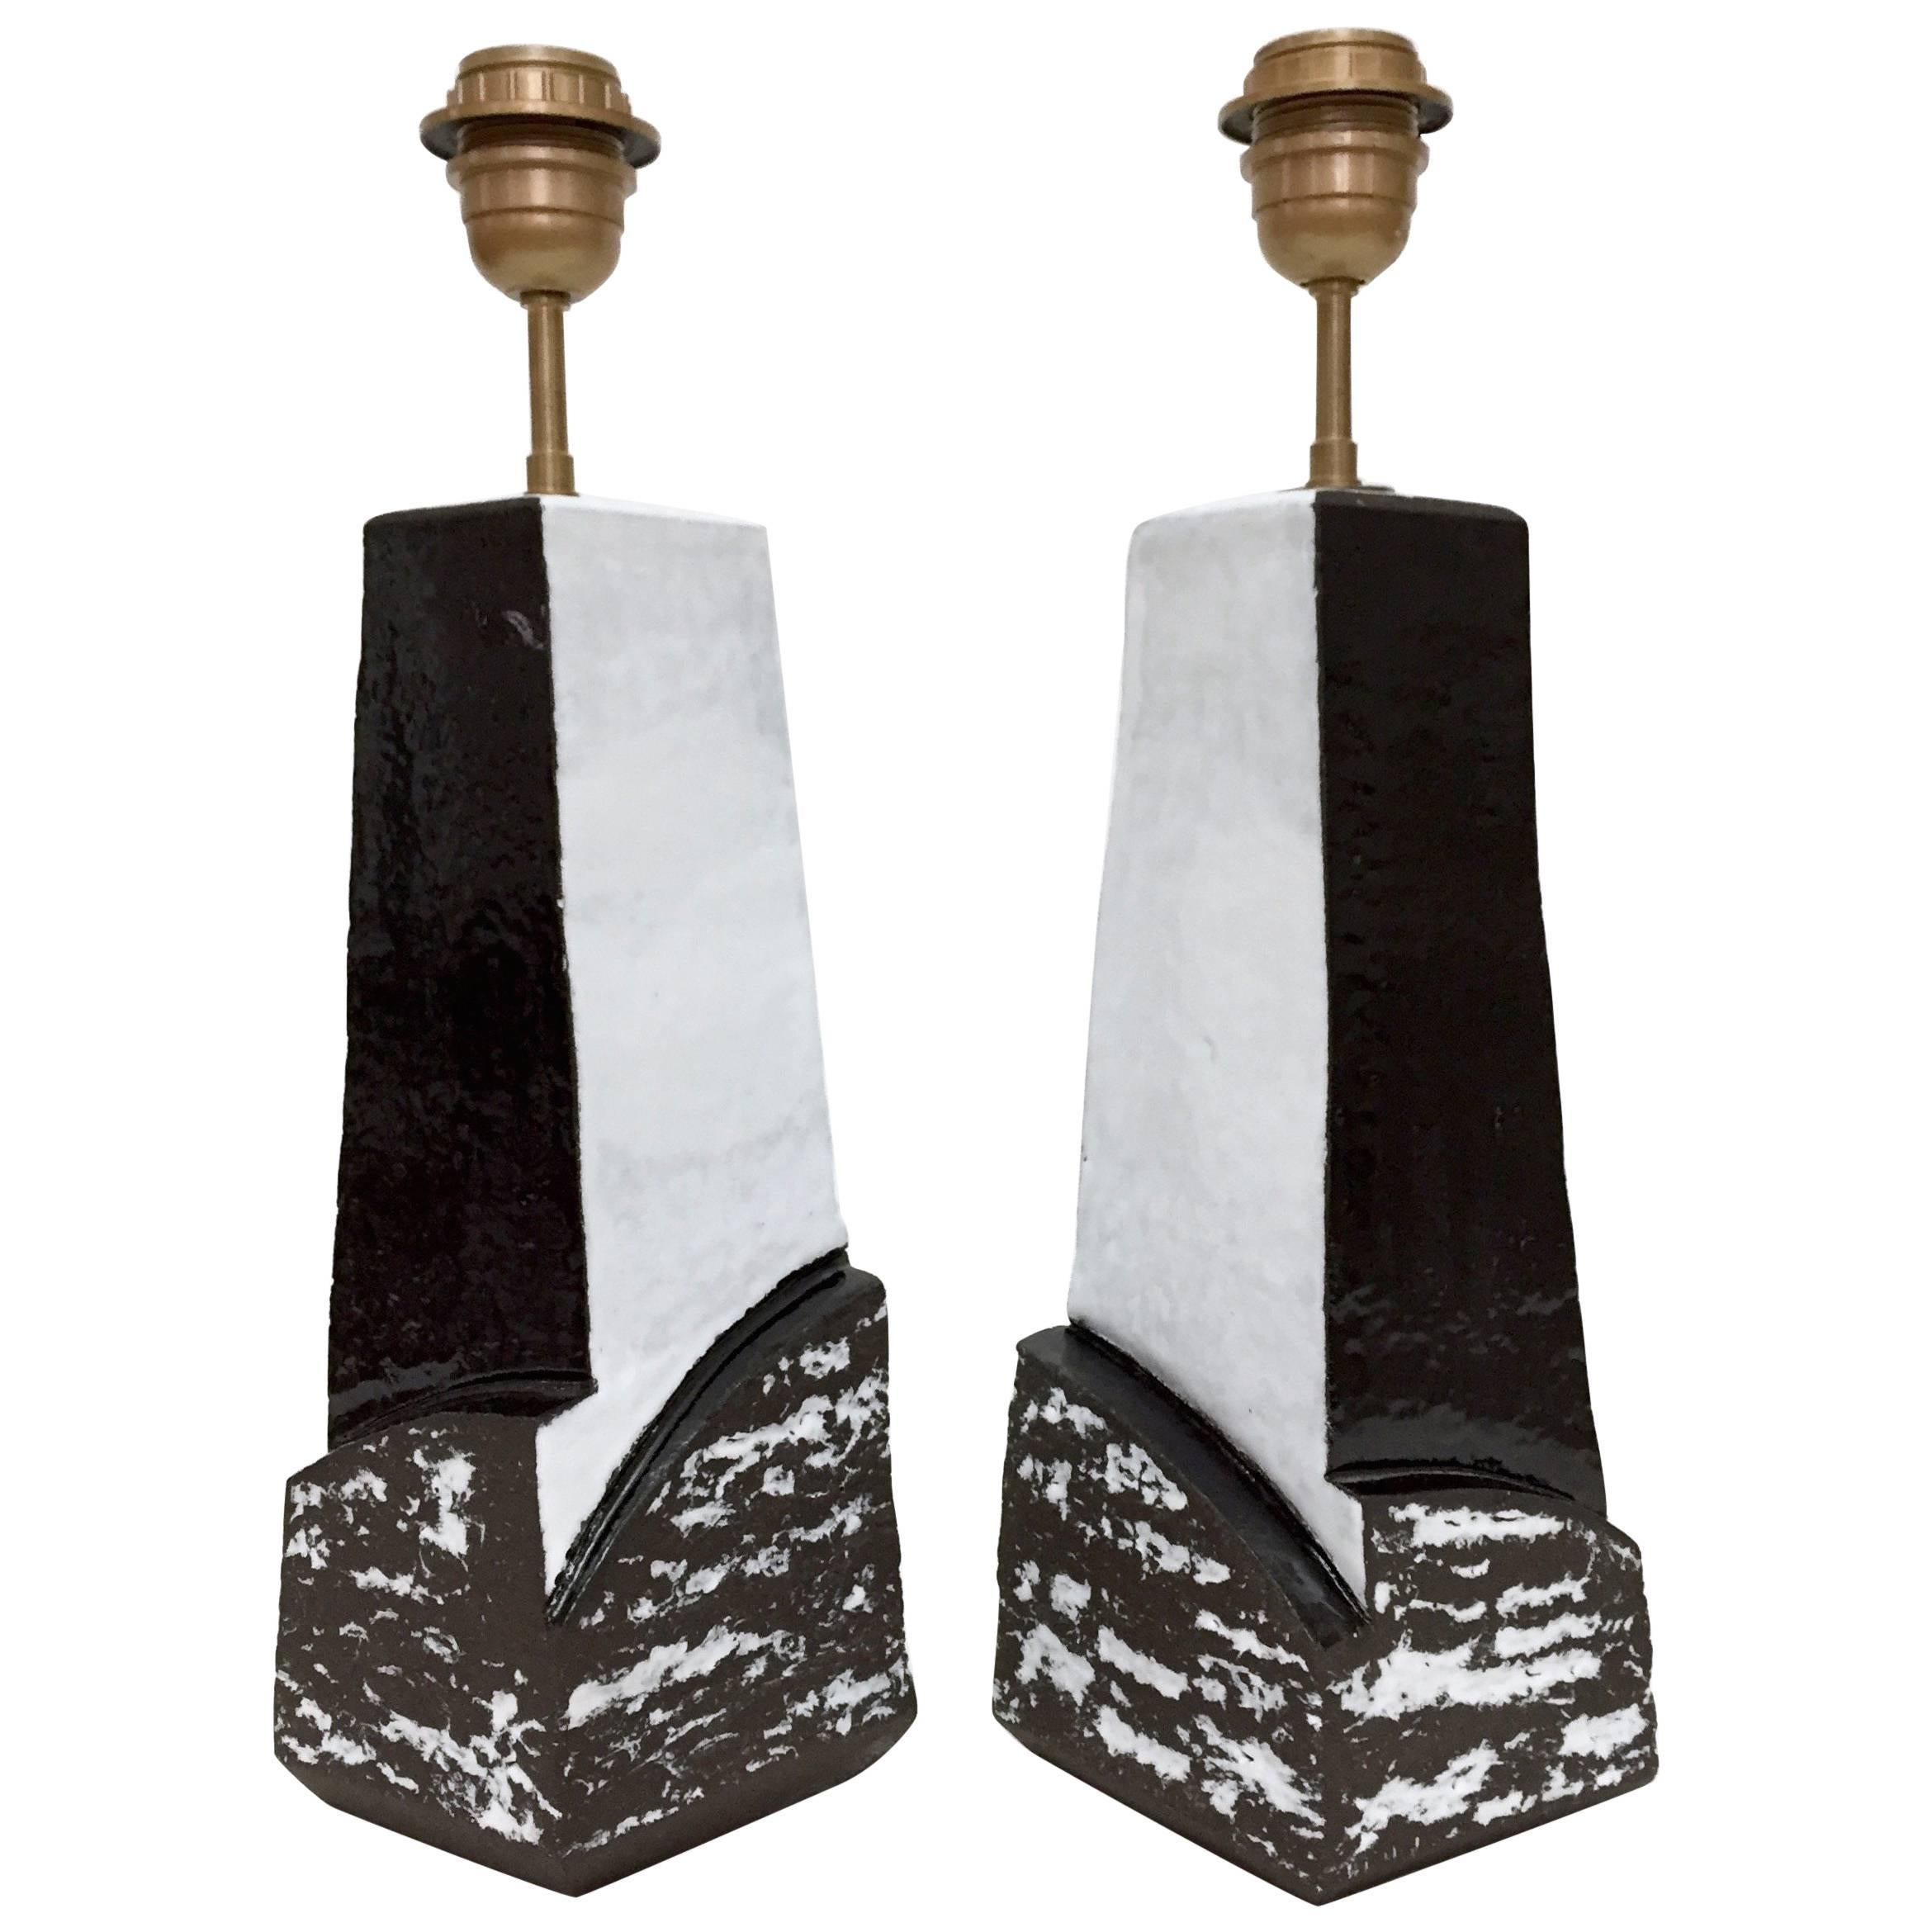 Pair of Ceramic Lamp Bases Glazed in Black and White